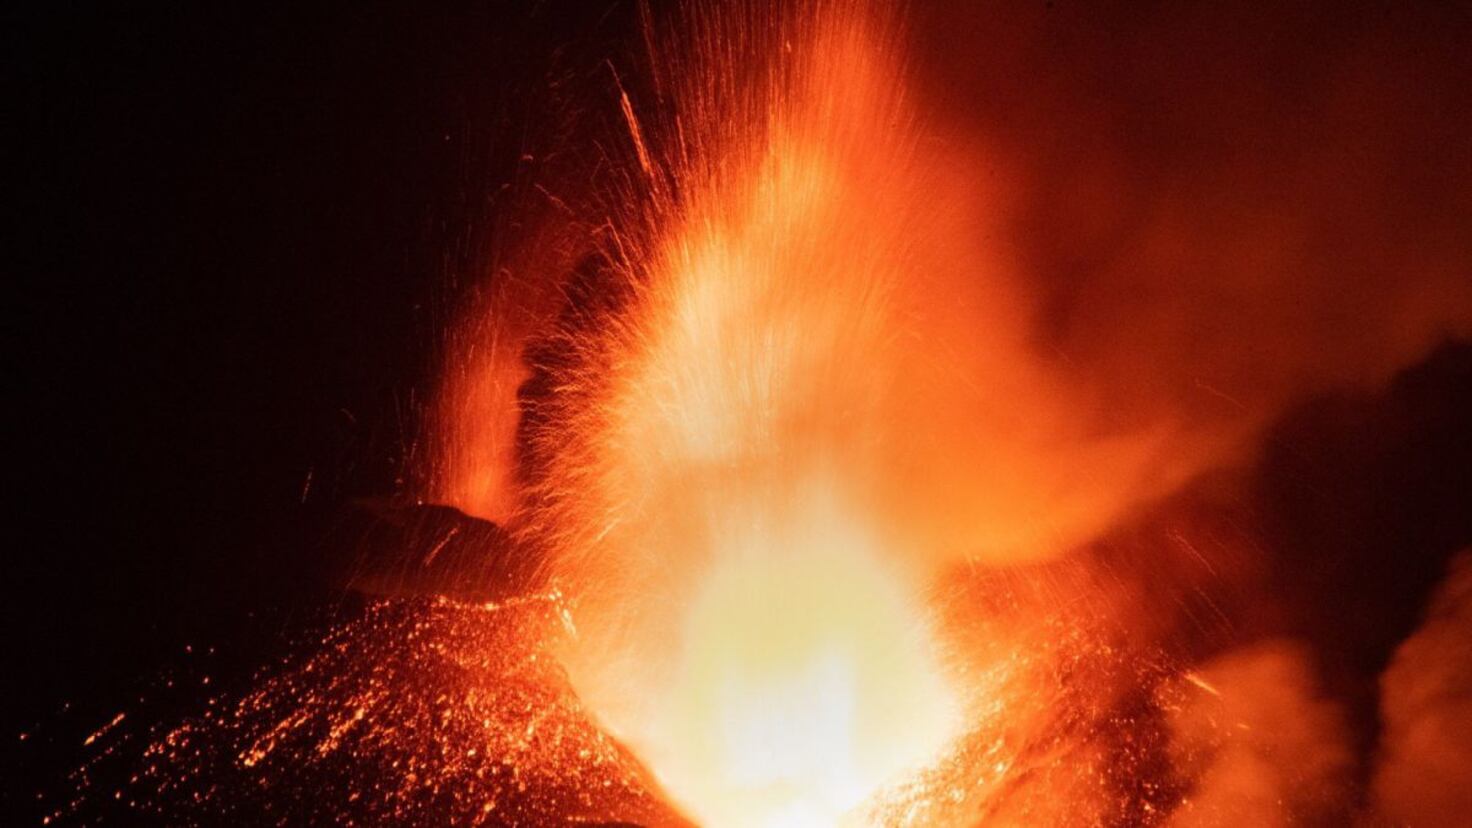 La Palma volcano eruption news summary: 29 October 2021